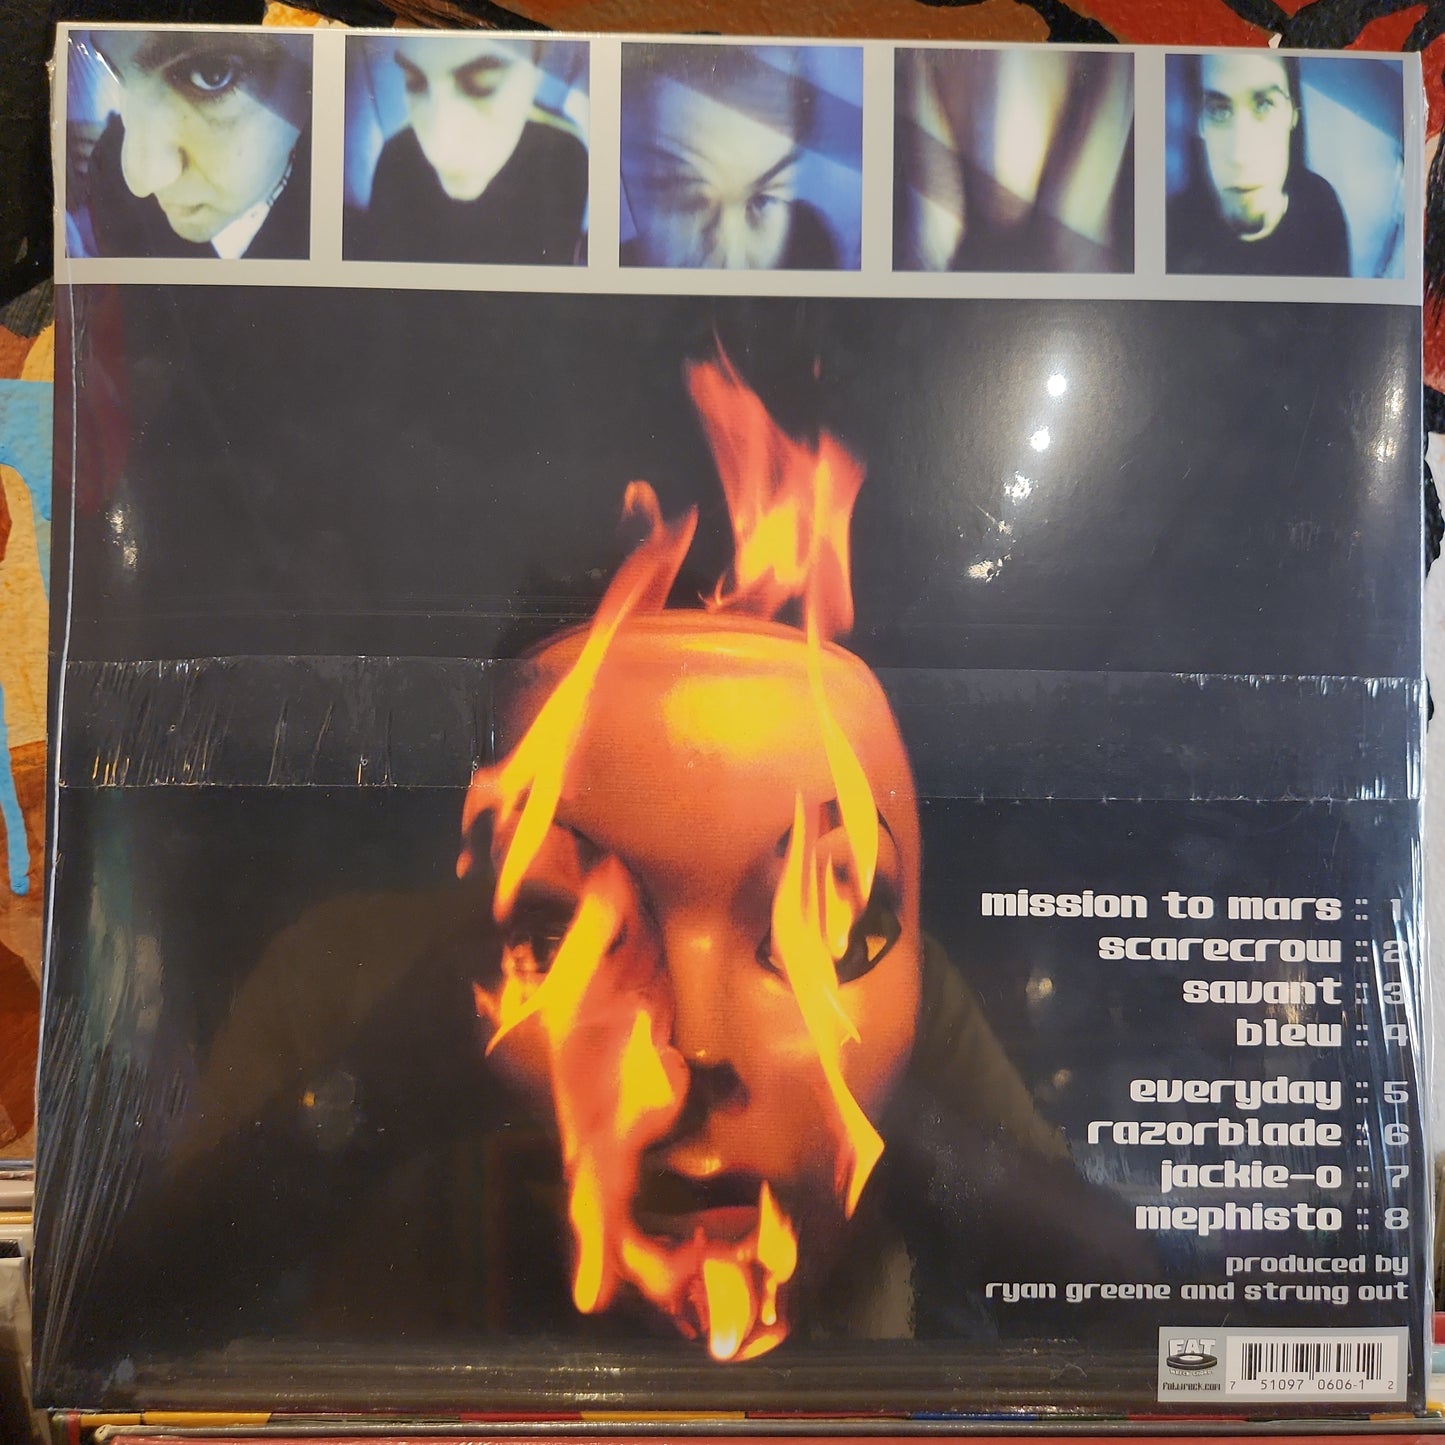 Strung Out - The Element of Sonic Defiance - Vinyl LP